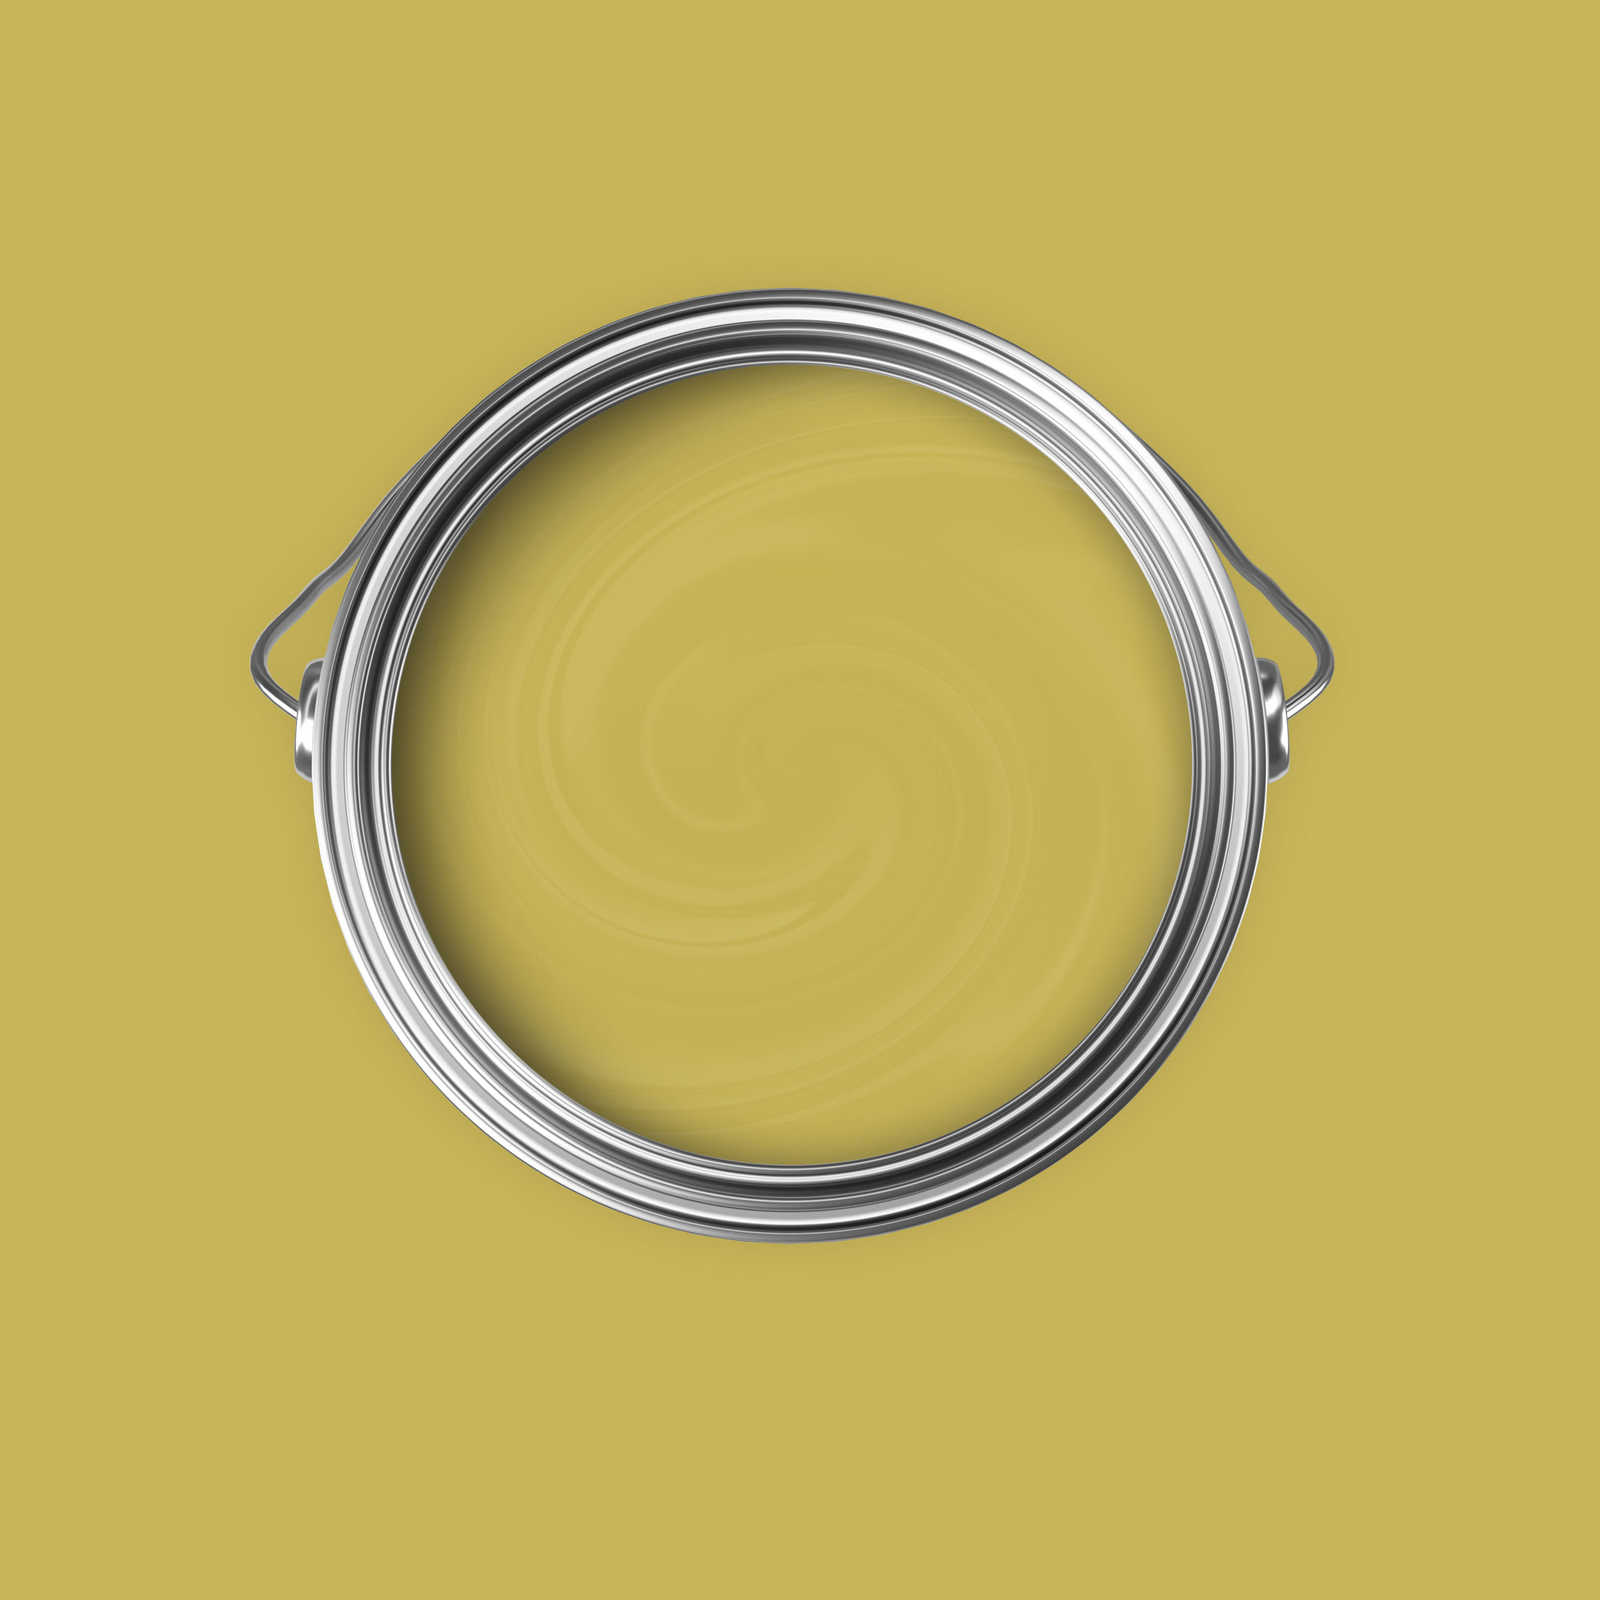             Premium Wall Paint Radiant Pistachio »Lucky Lime« NW603 – 5 litre
        